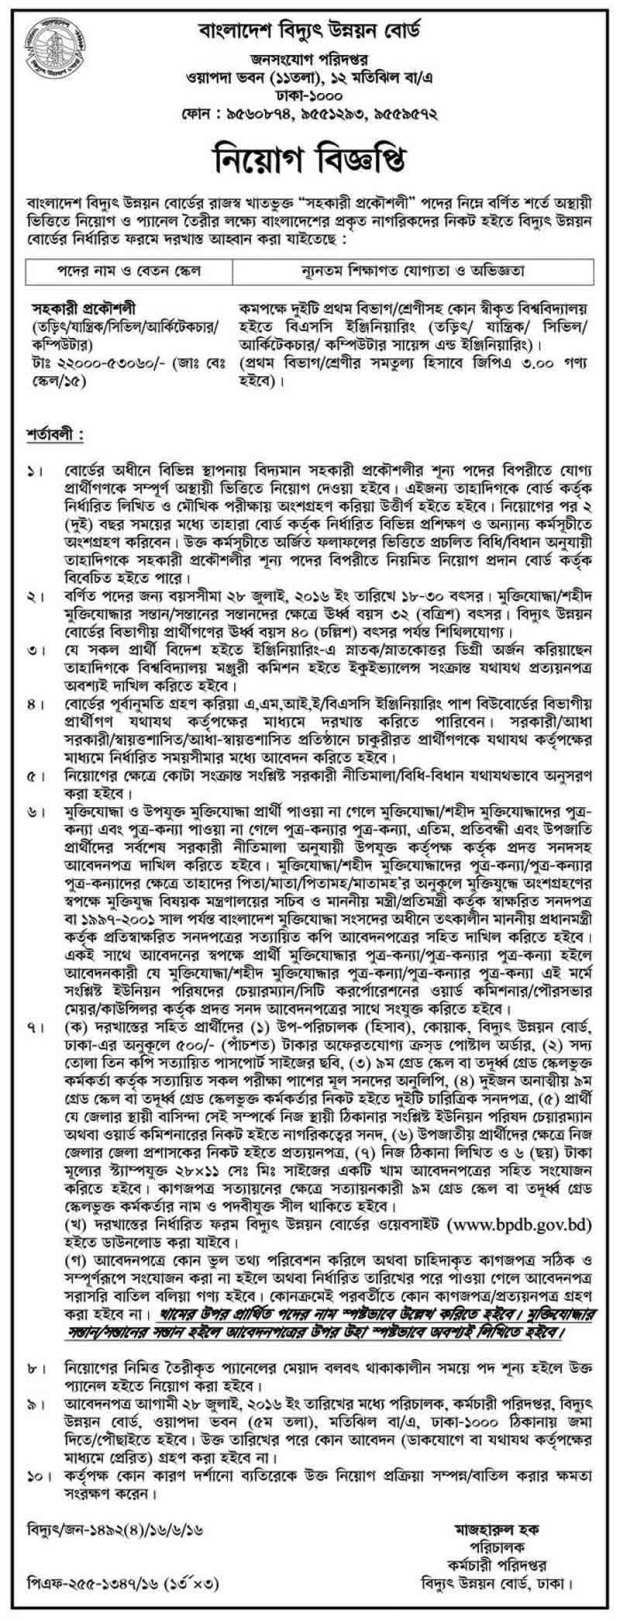 Bangladesh Power Development Board Job